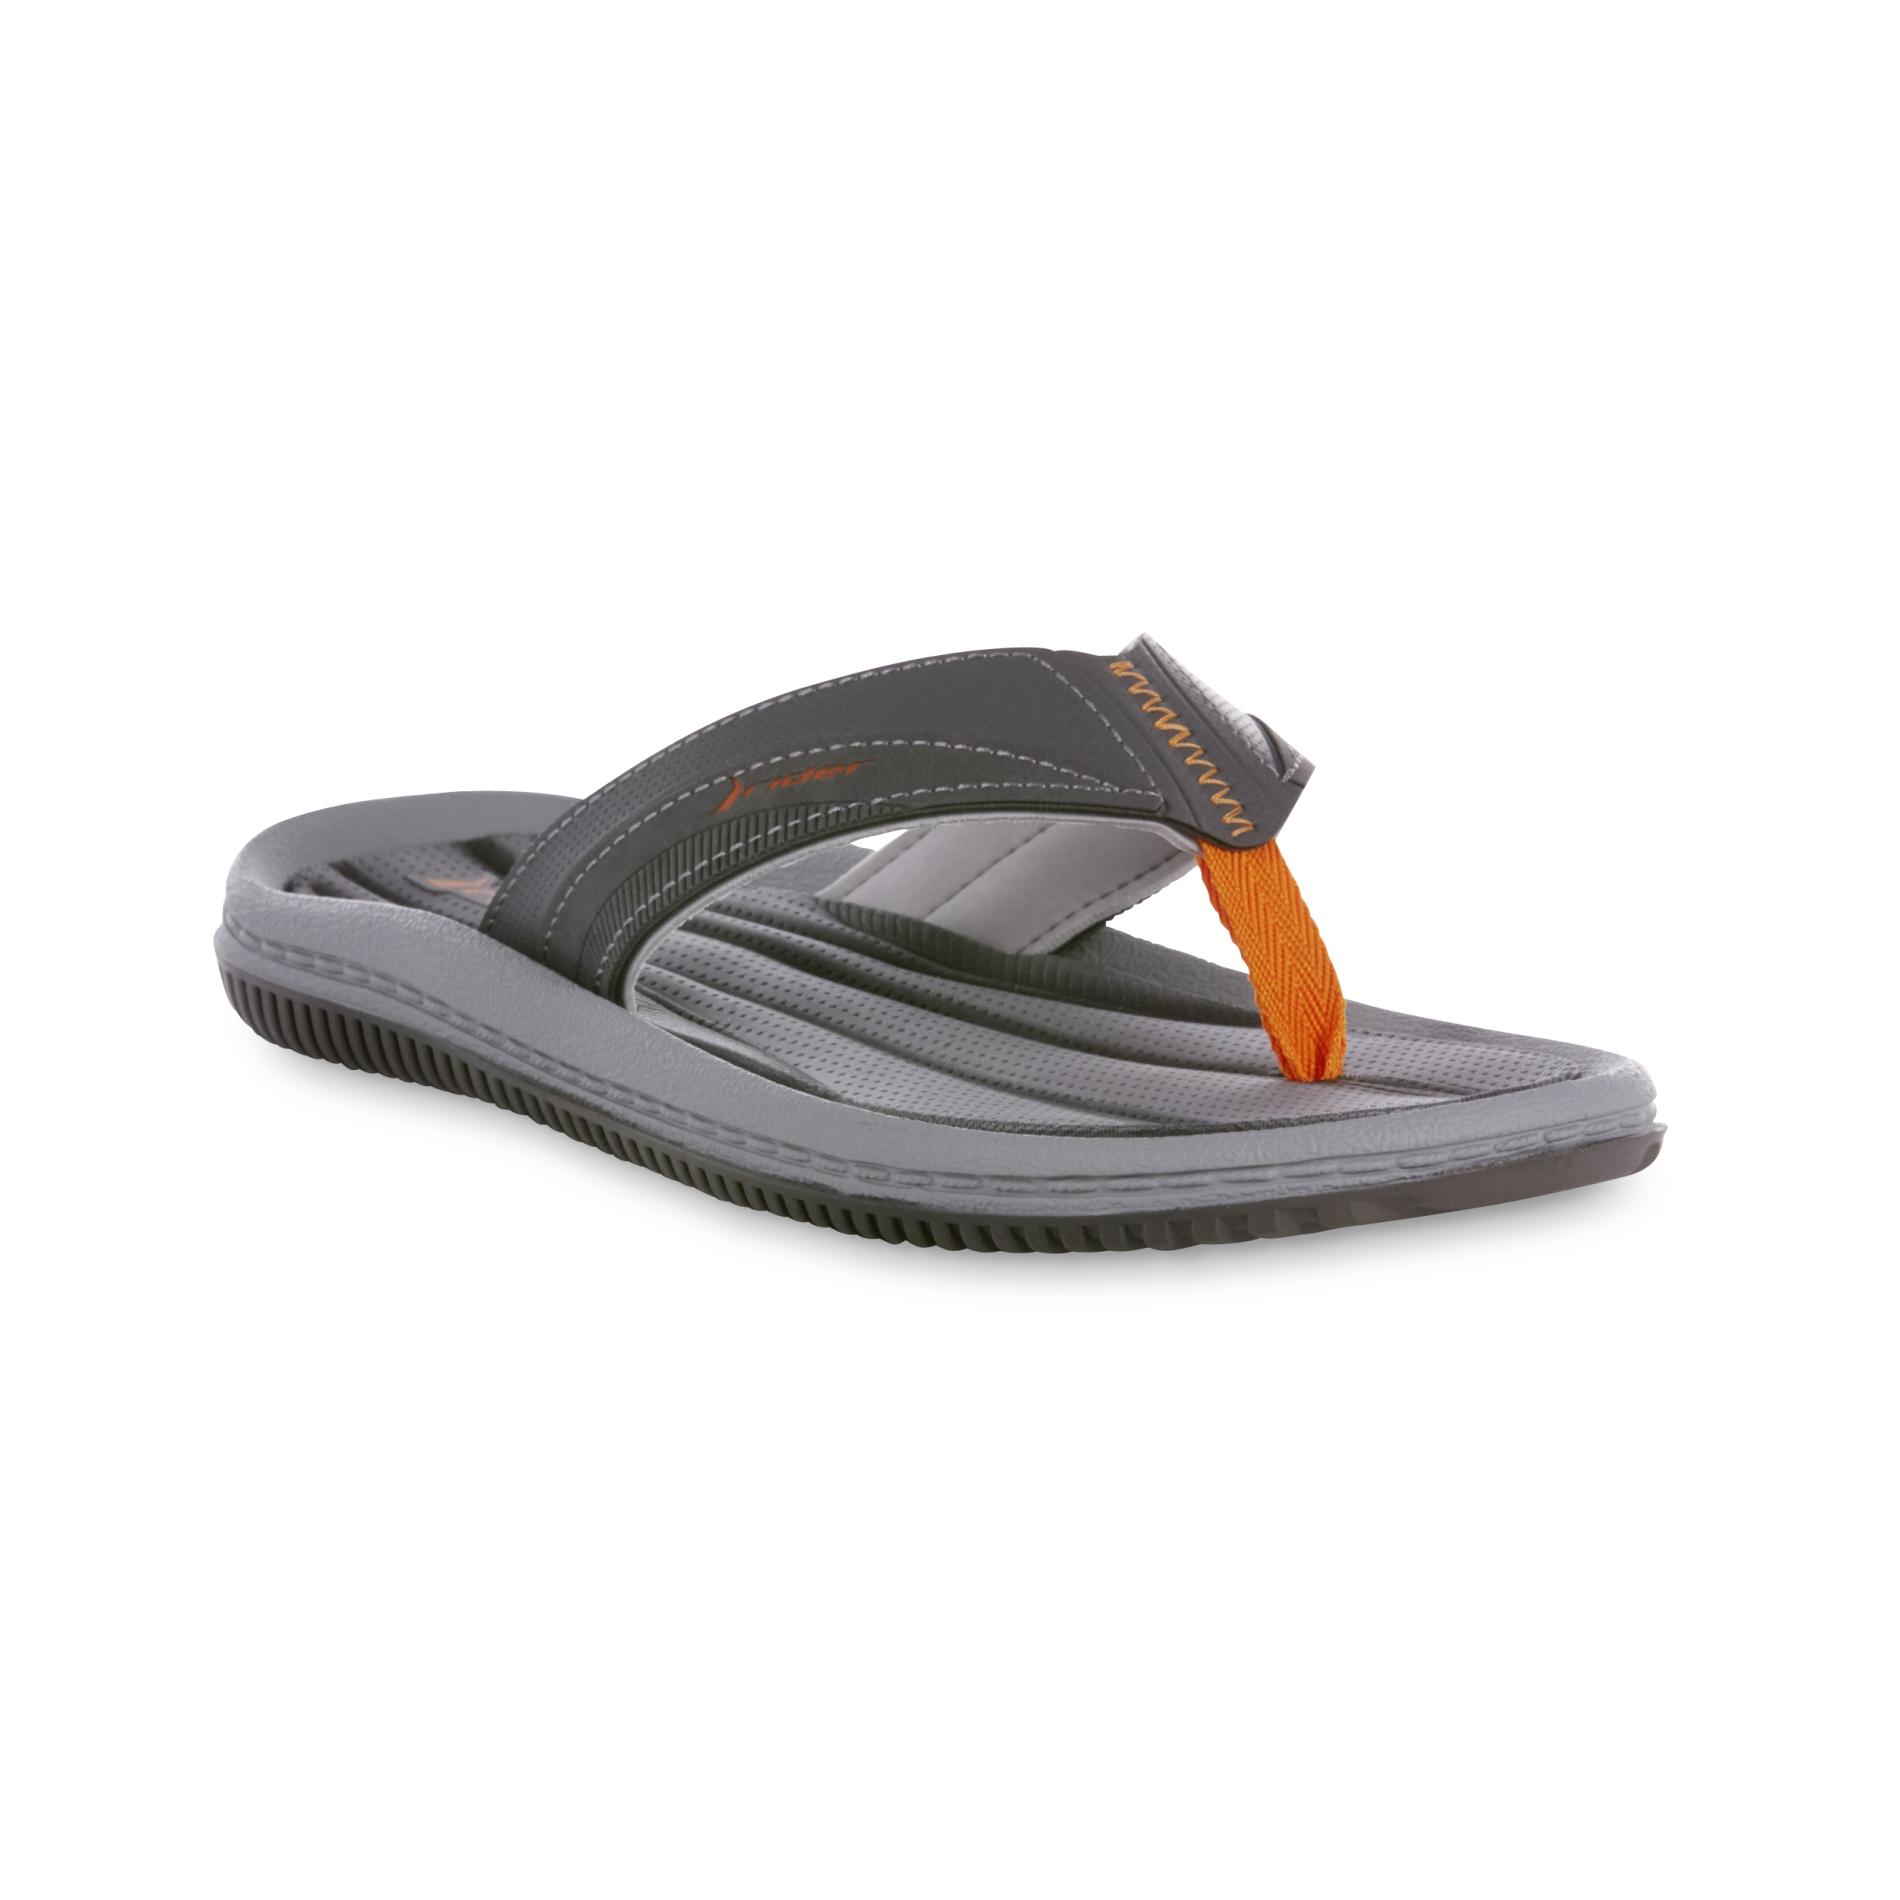 Rider Sandals Men's Dumas XI Gray/Orange Flip-Flop Sandal